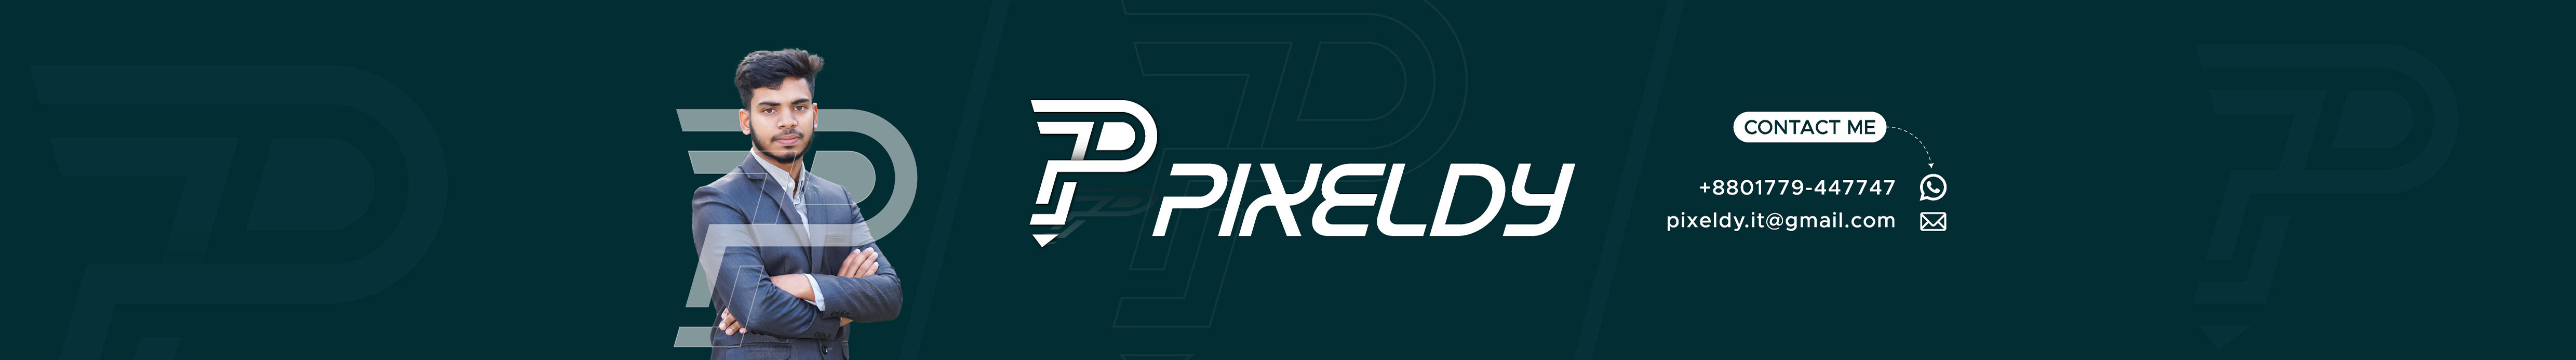 PIXEL DY's profile banner